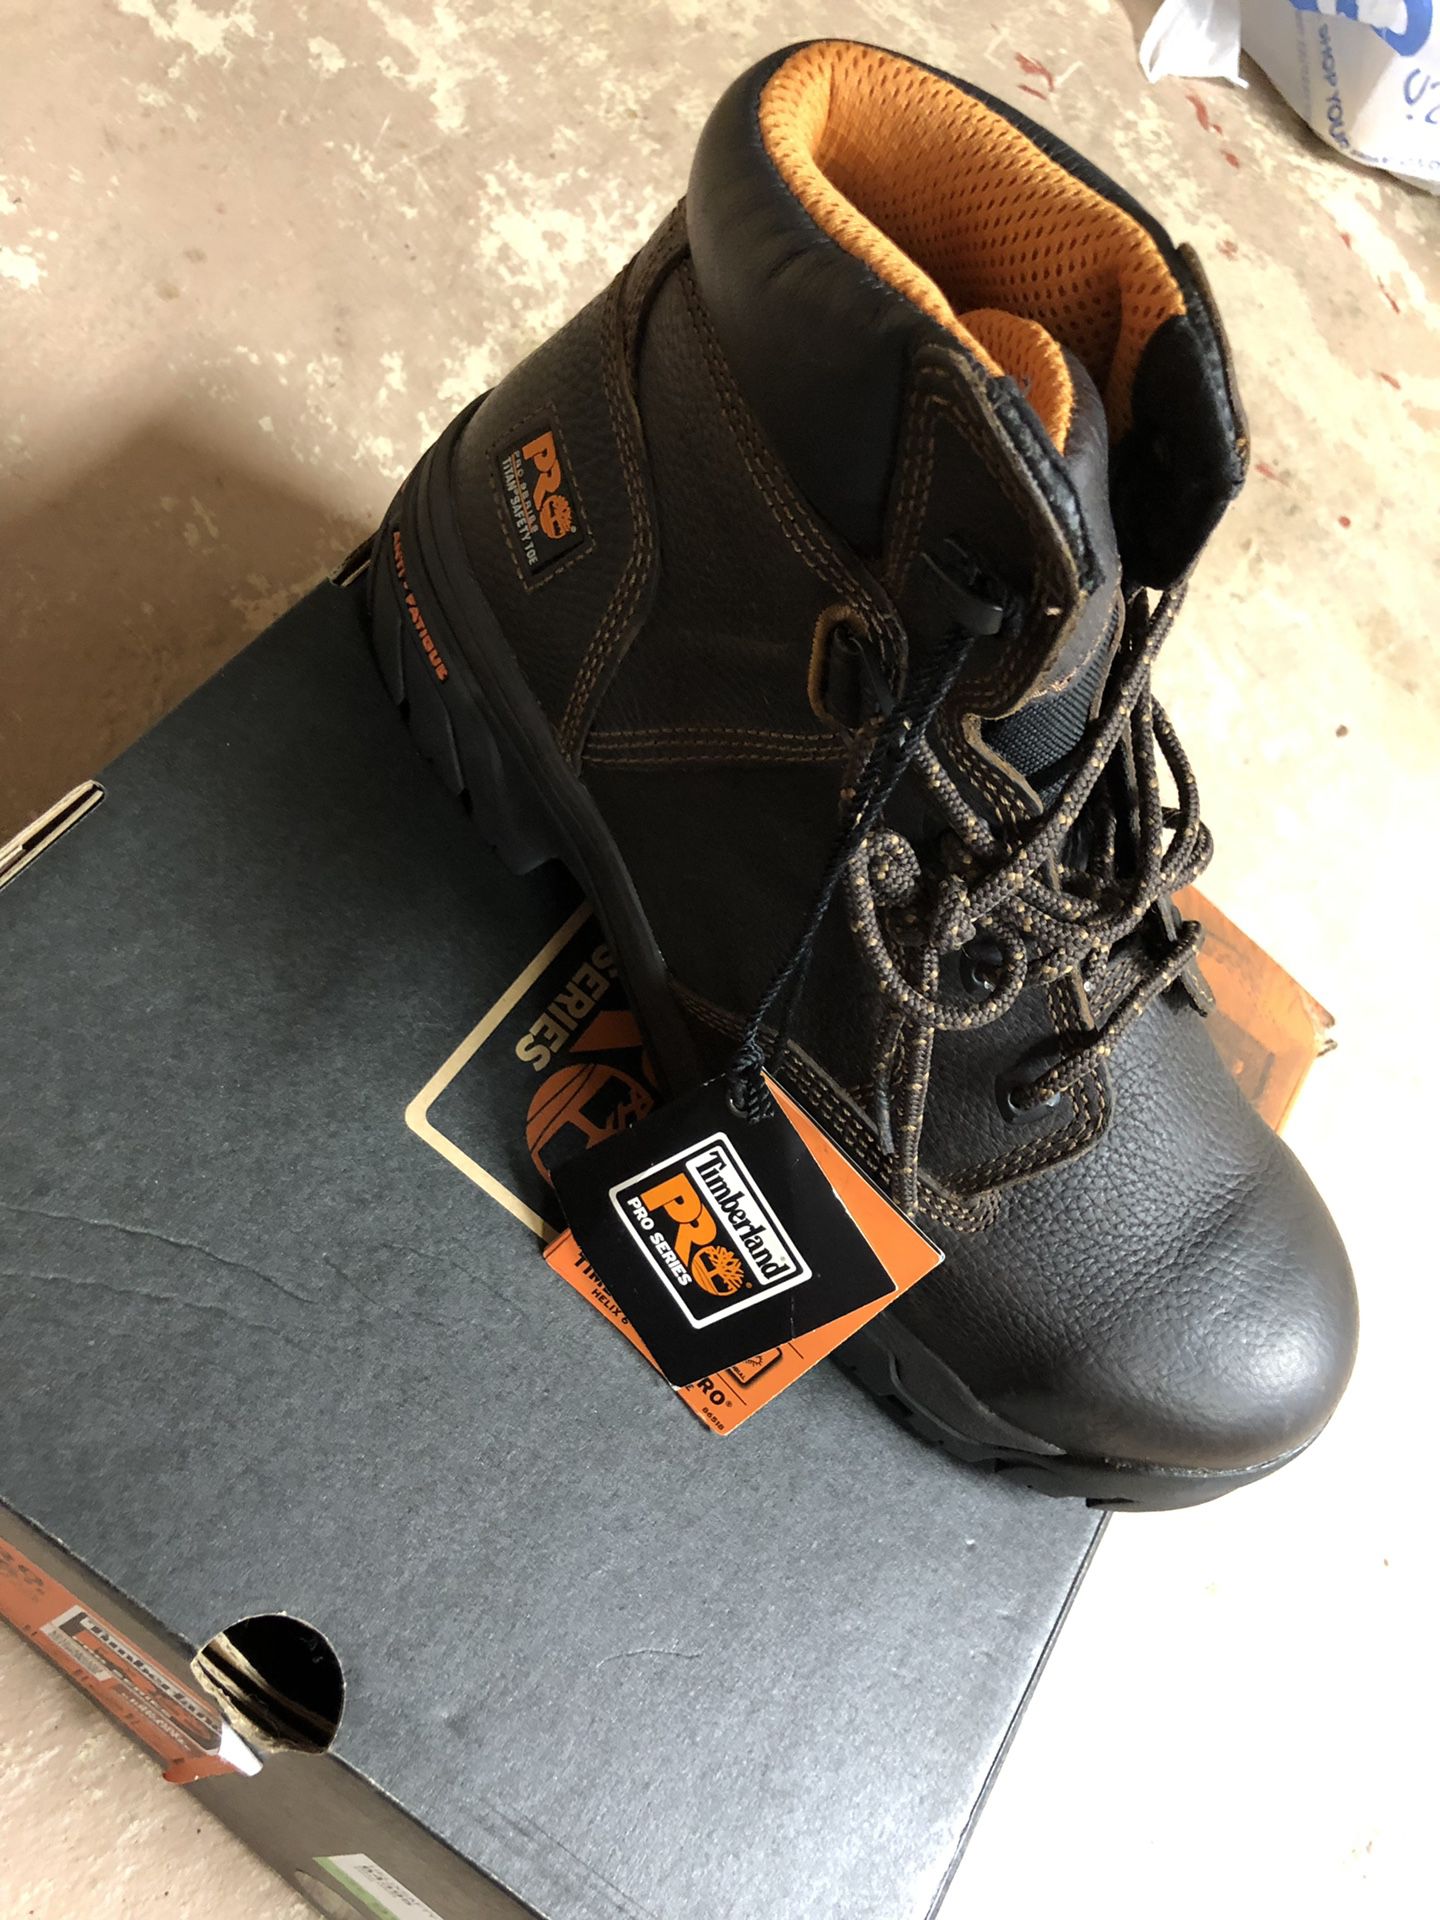 Timberland work boot